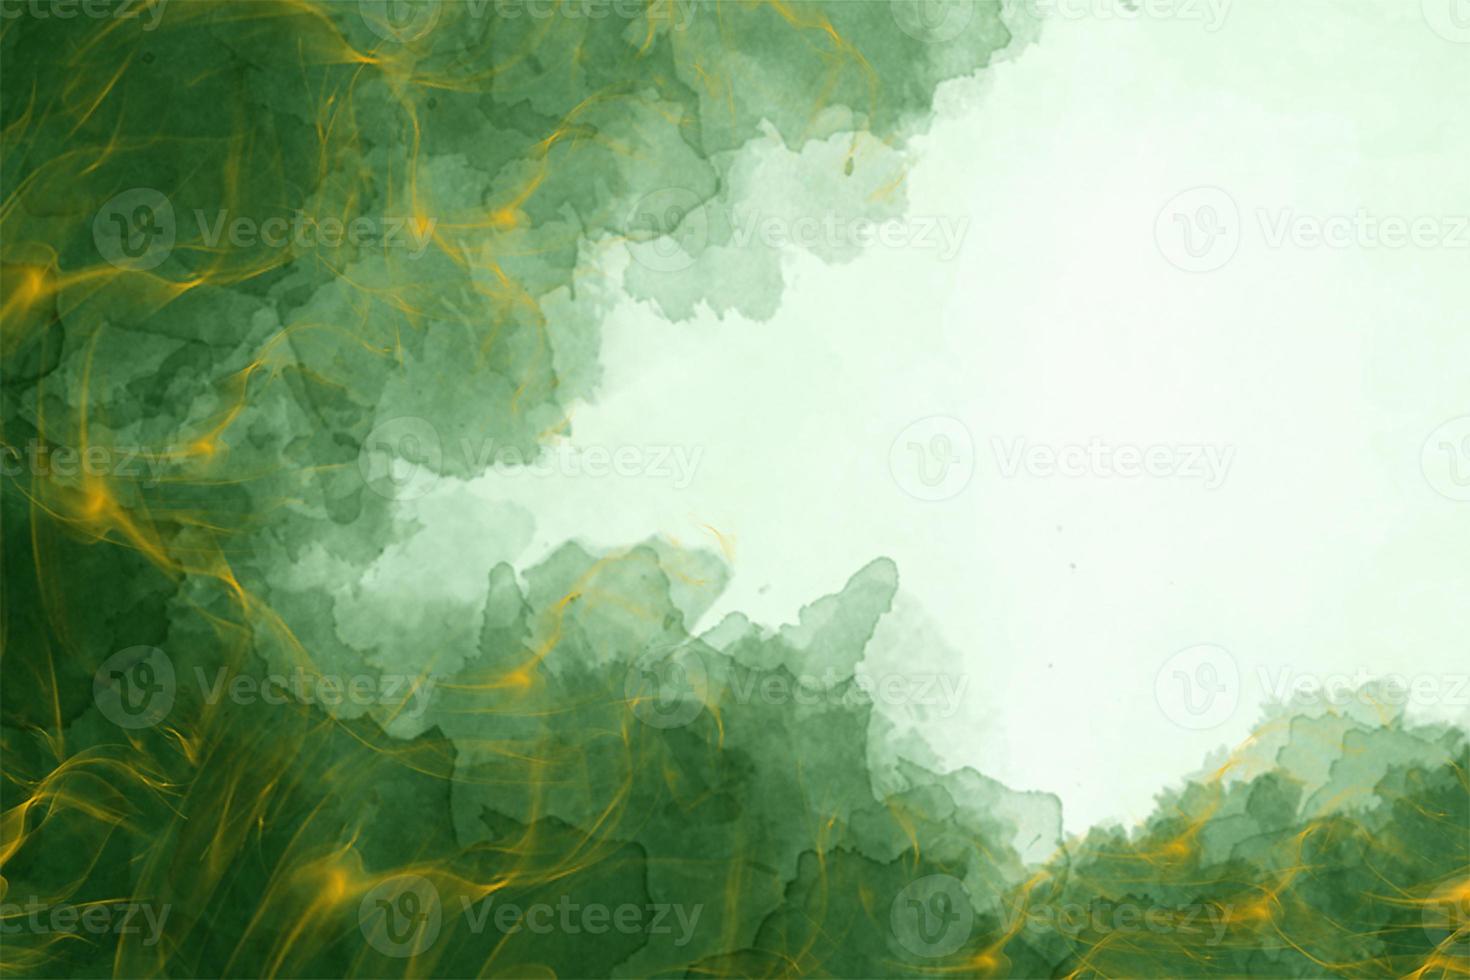 groen goud glanzend waterverf abstract achtergrond foto